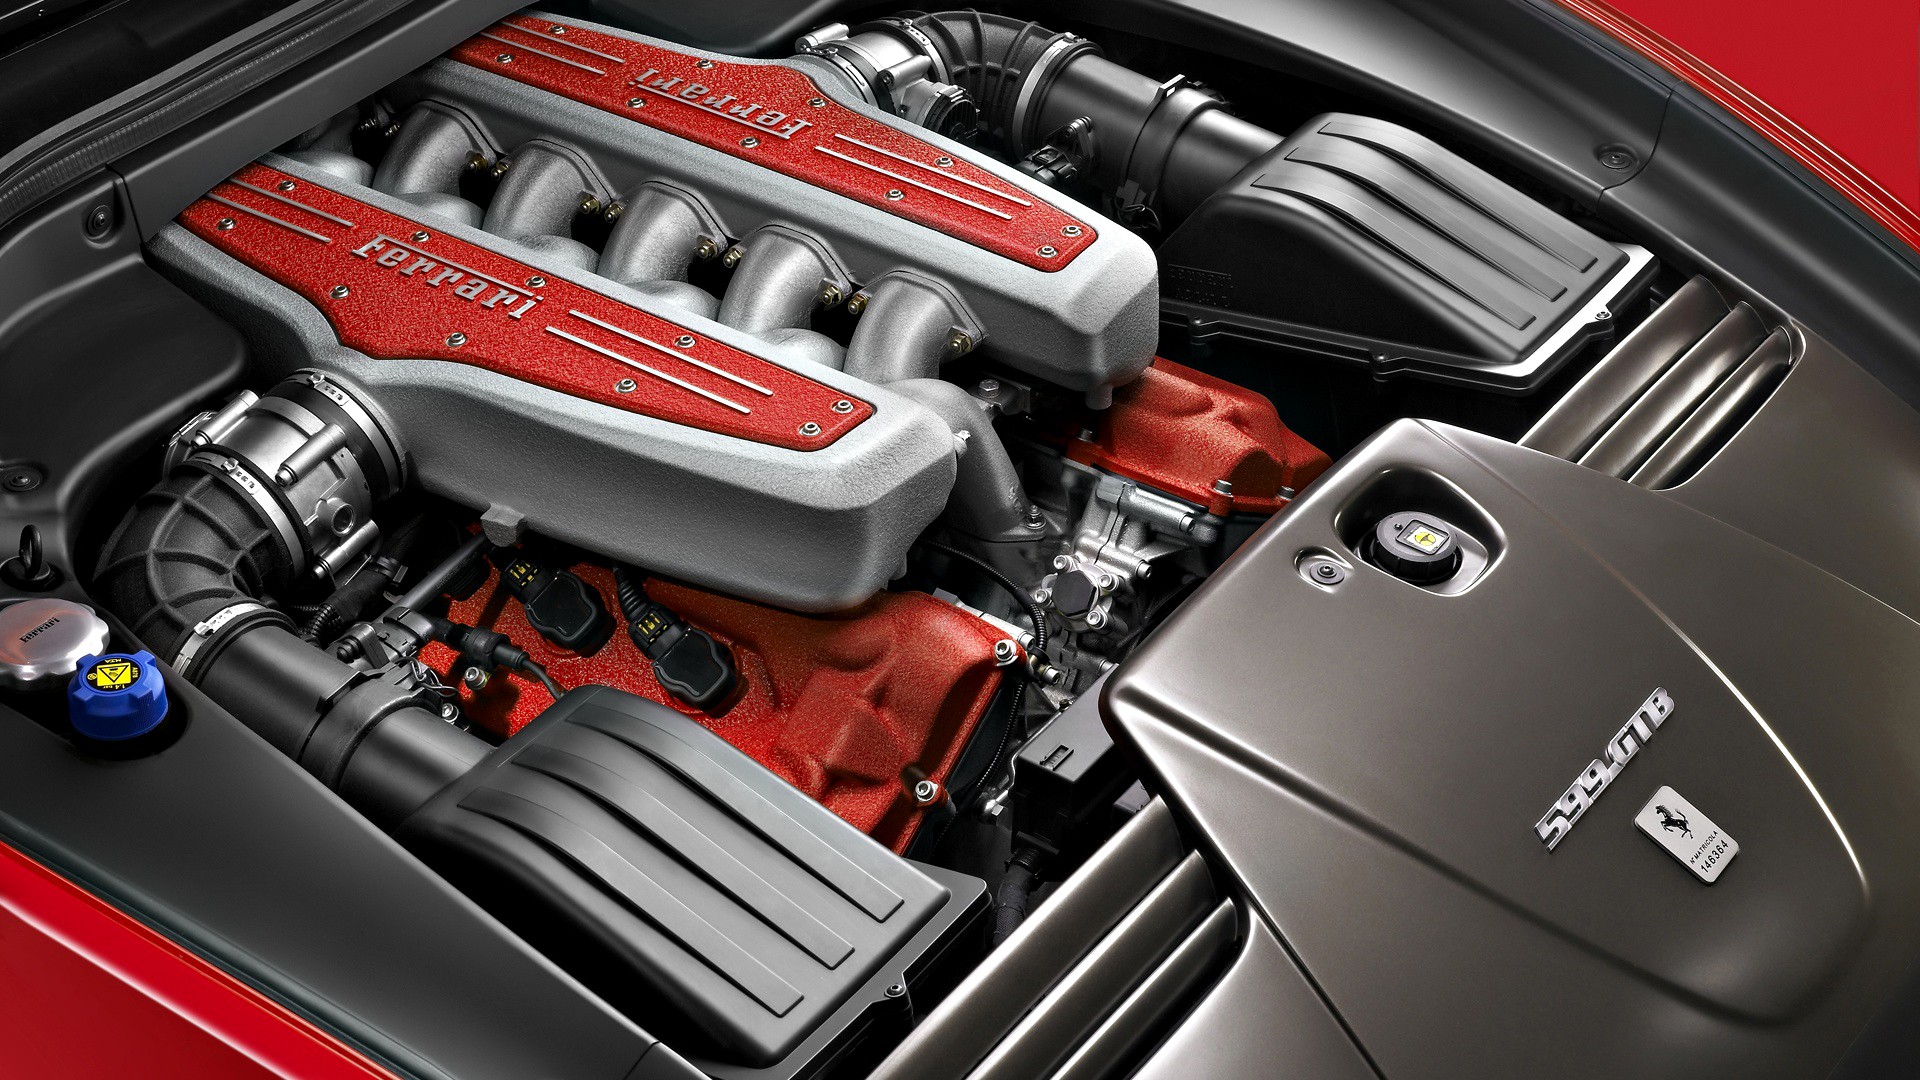 автомобили, двигатели, Феррари, Ferrari 599 GTO - обои на рабочий стол